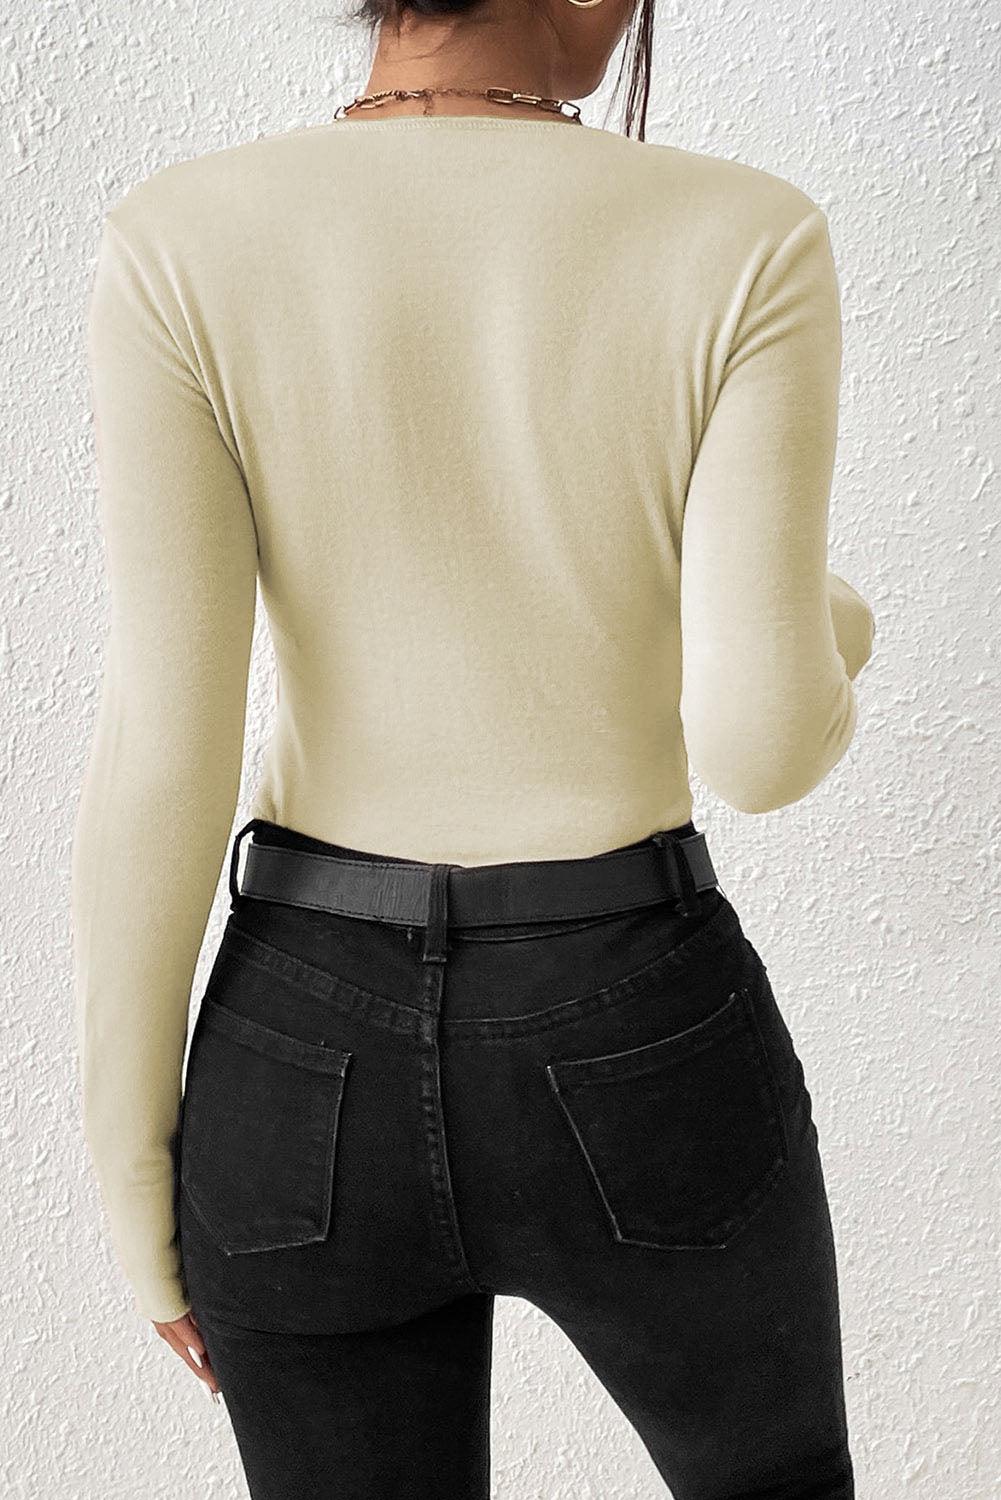 Apricot Scoop Neck Seam Detail Long Sleeve Bodysuit - L & M Kee, LLC